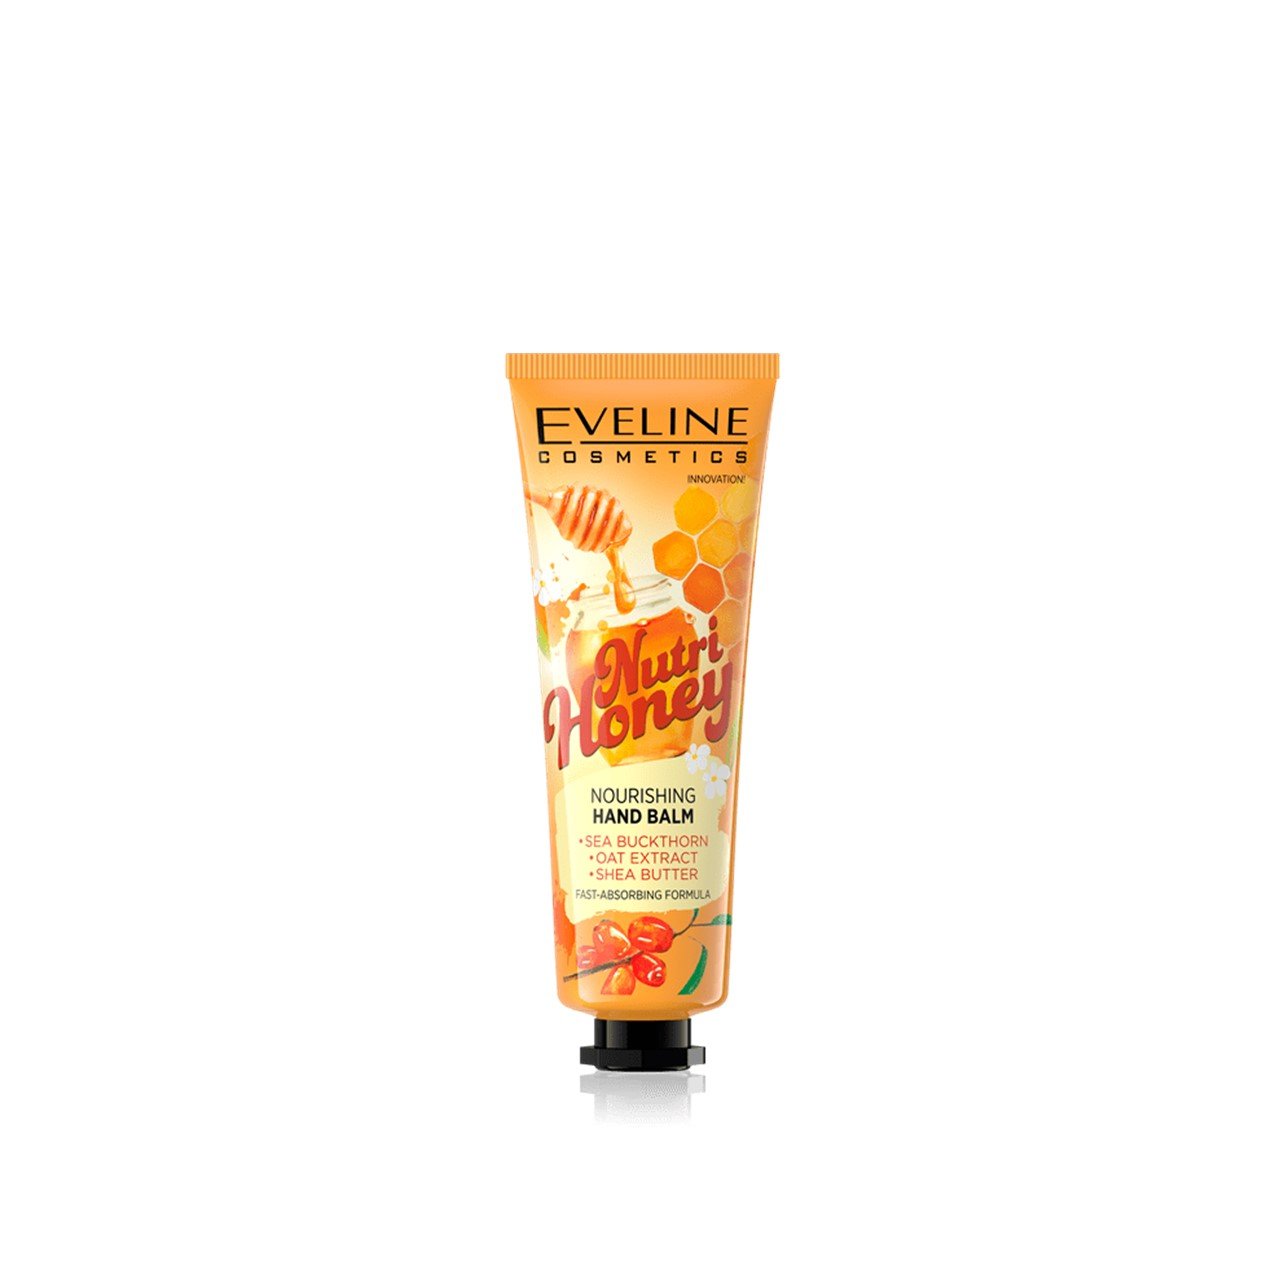 Eveline Cosmetics Nutri Honey Nourishing Hand Balm 50ml (1.76 fl oz)